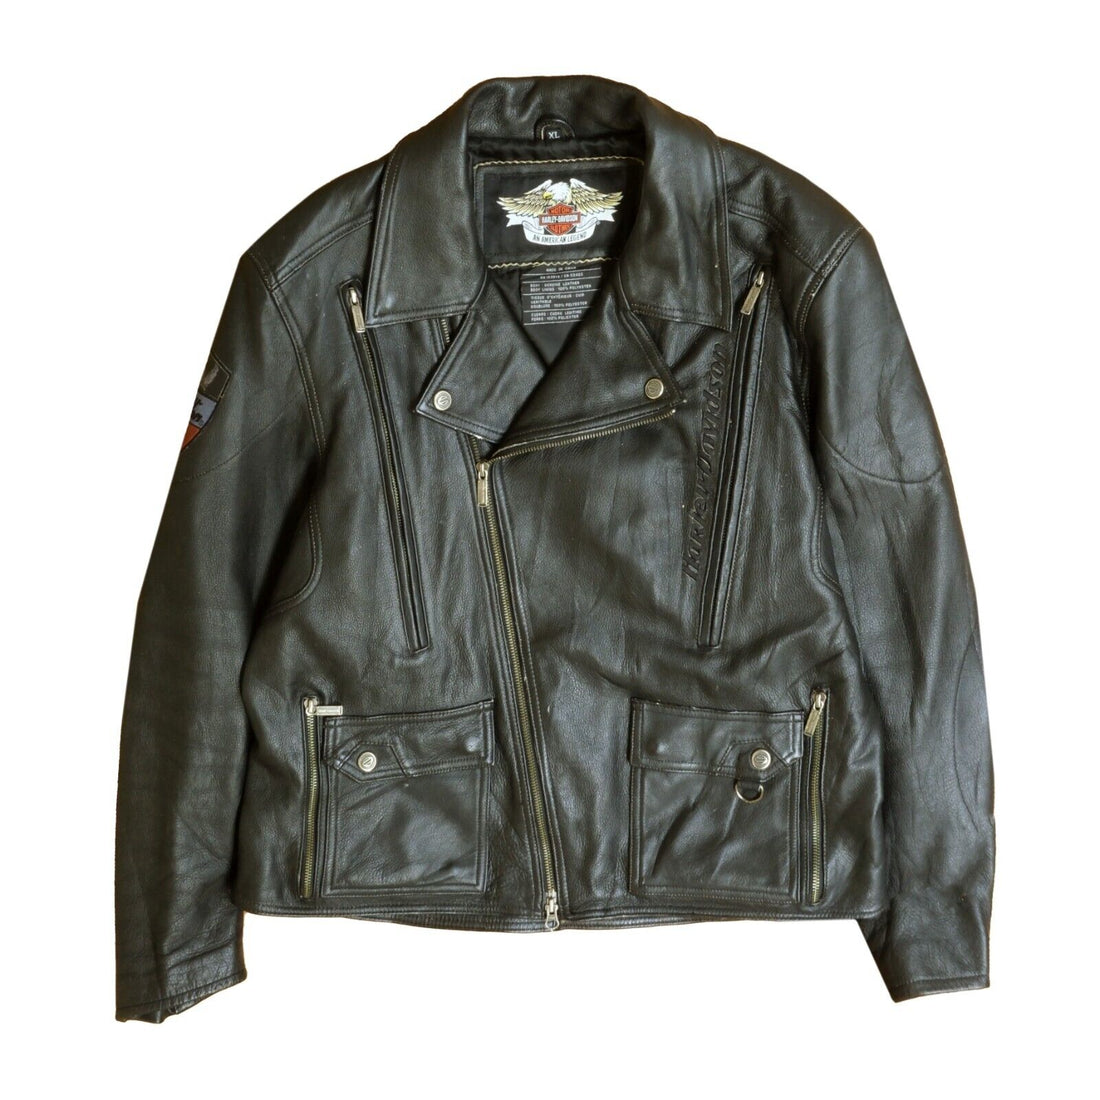 Vintage Harley Davidson Leather Motorcycle Jacket Size XL Black 90s Embroidered